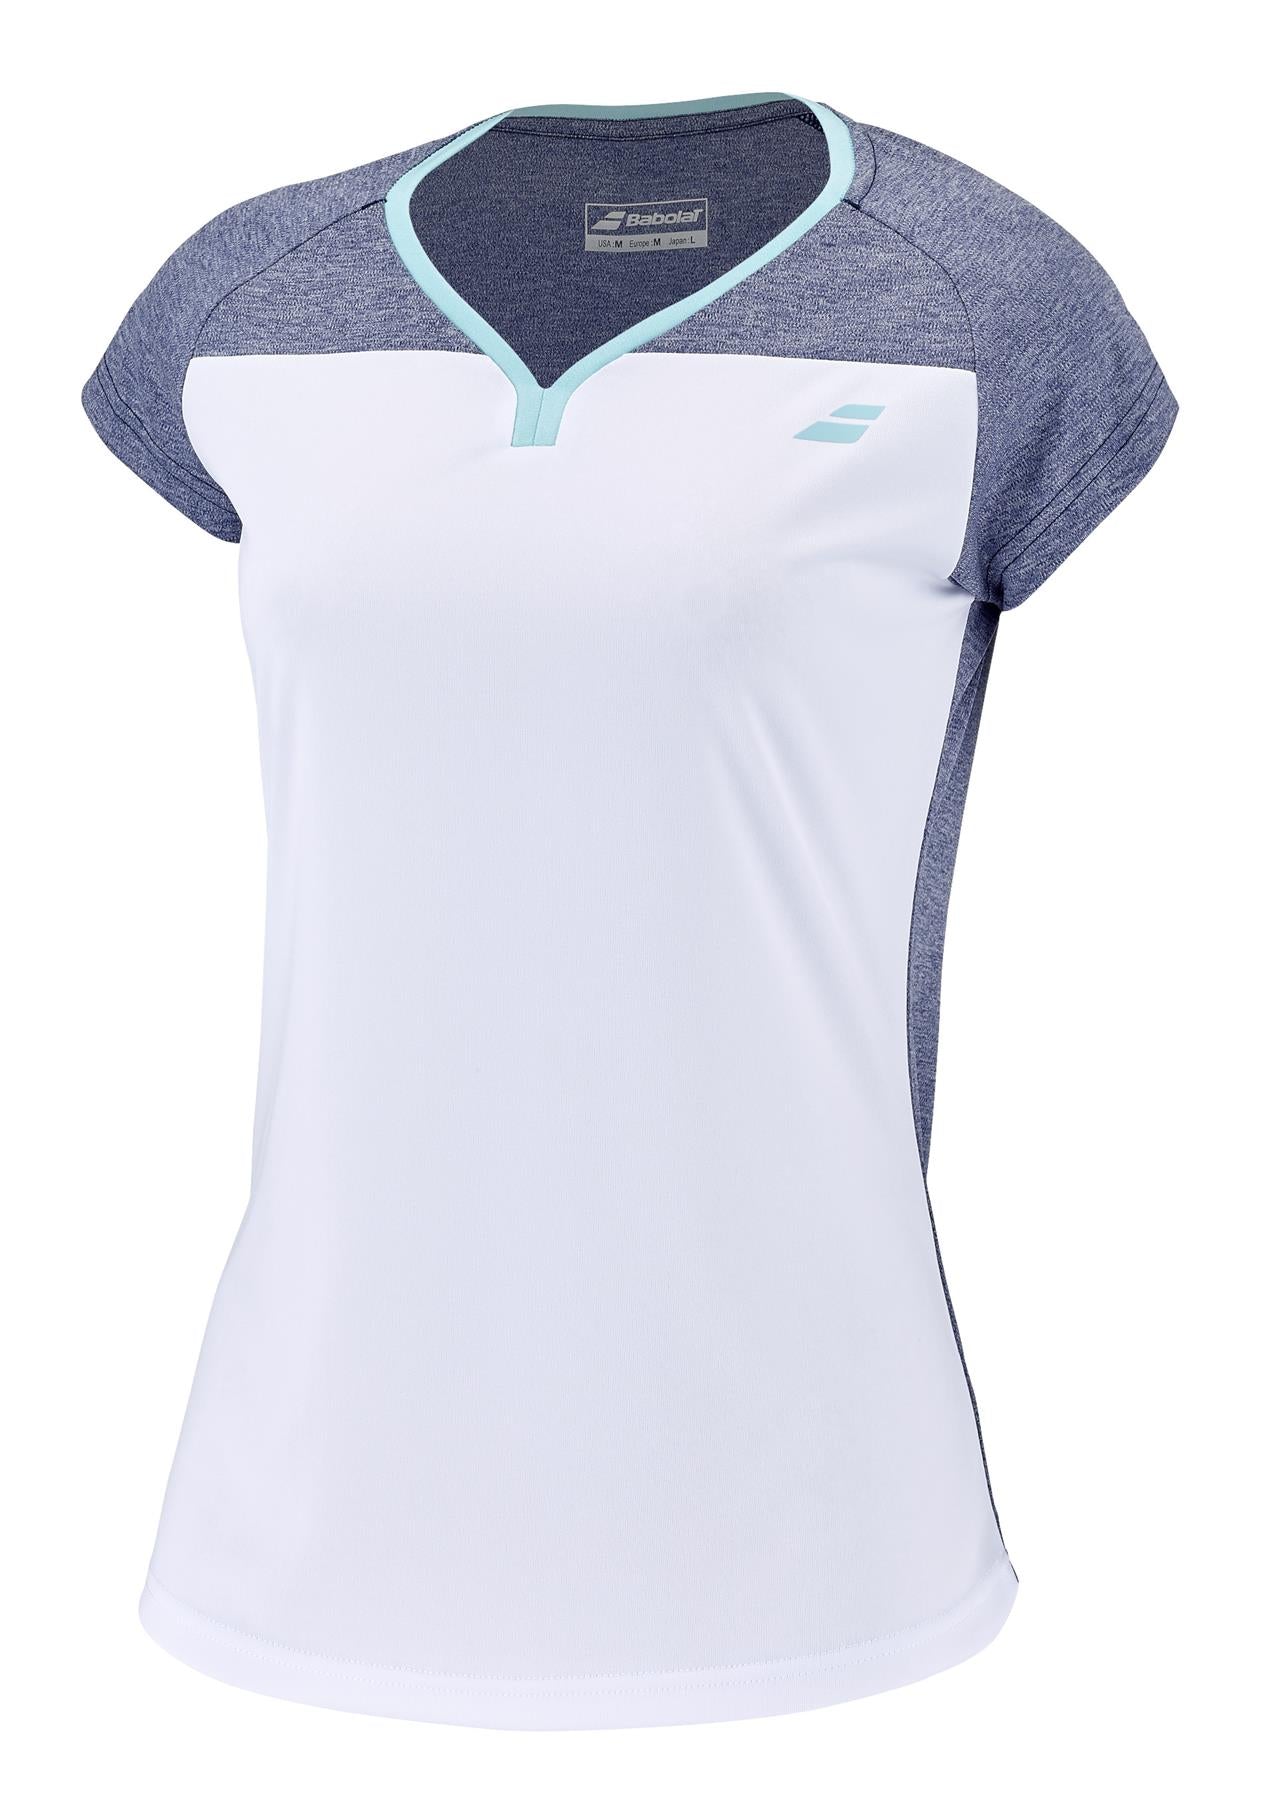 Babolat Play Womens Badminton Cap Sleeve Top - White / Blue Heather - Angle